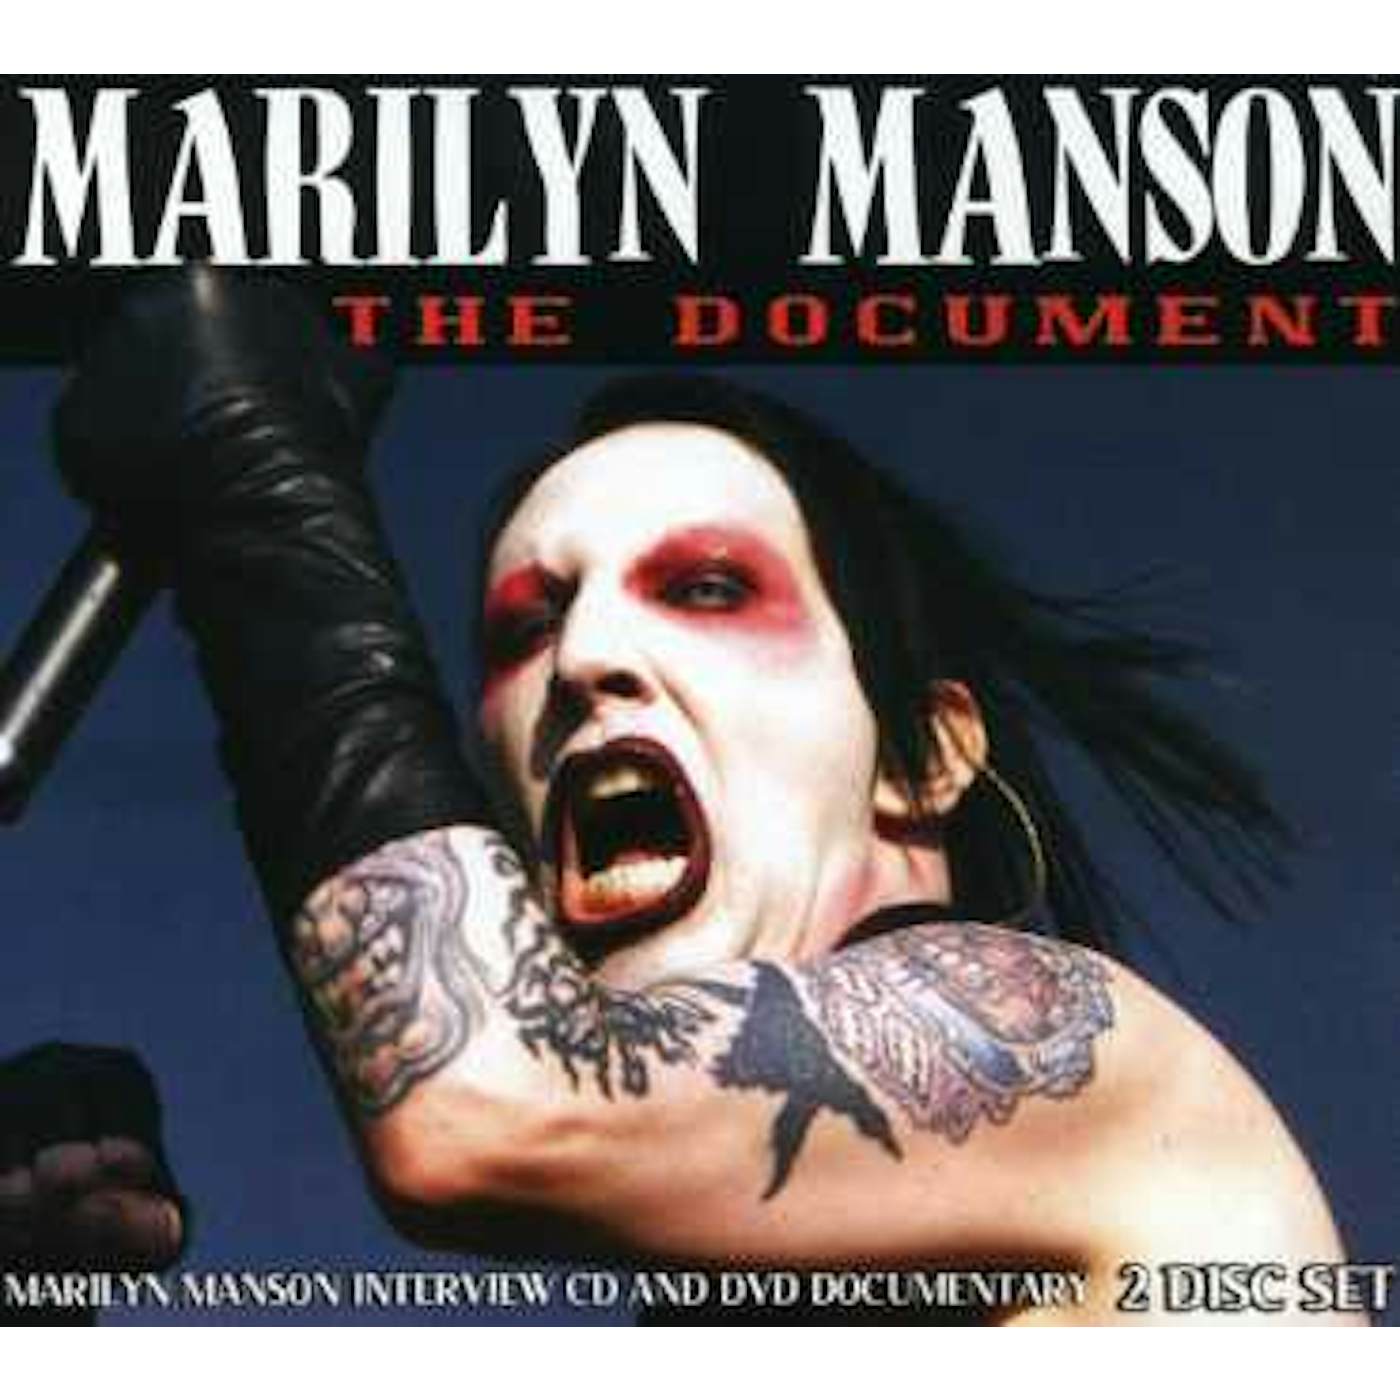 Marilyn Manson DOCUMENT CD